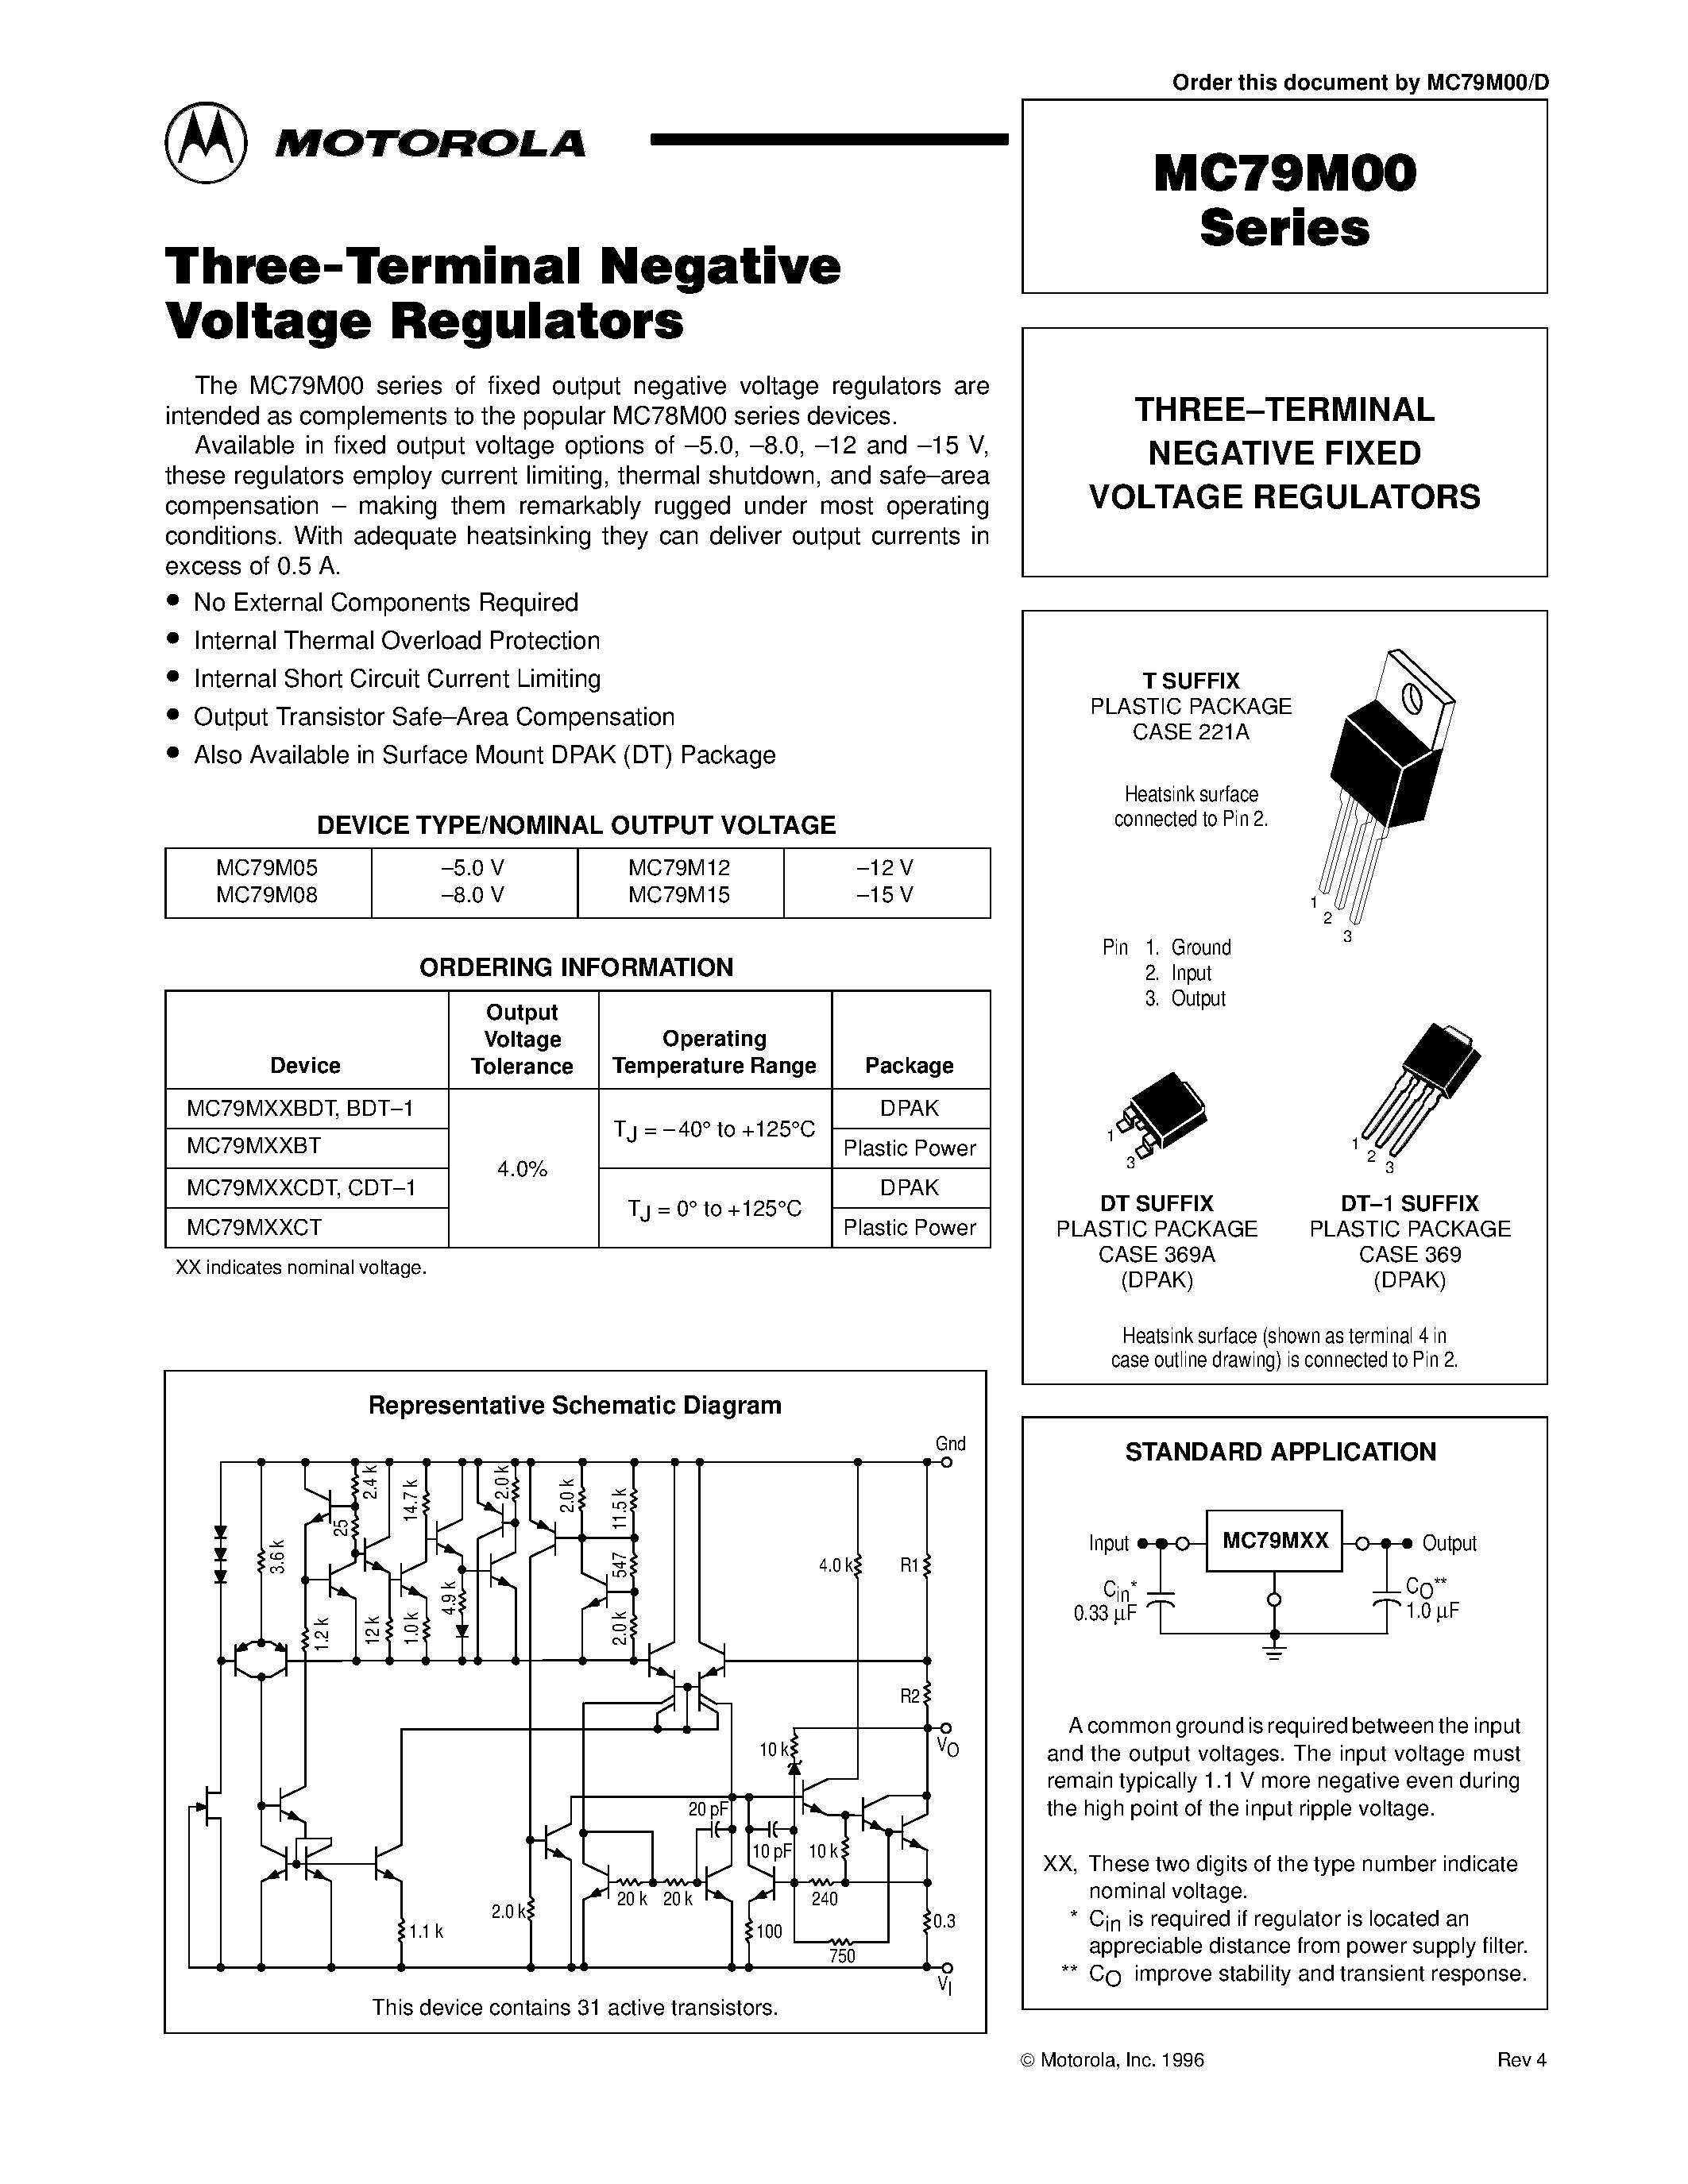 Datasheet MC79M12CDT - THREE-TERMINAL NEGATIVE FIXED VOLTAGE REGULATORS page 1